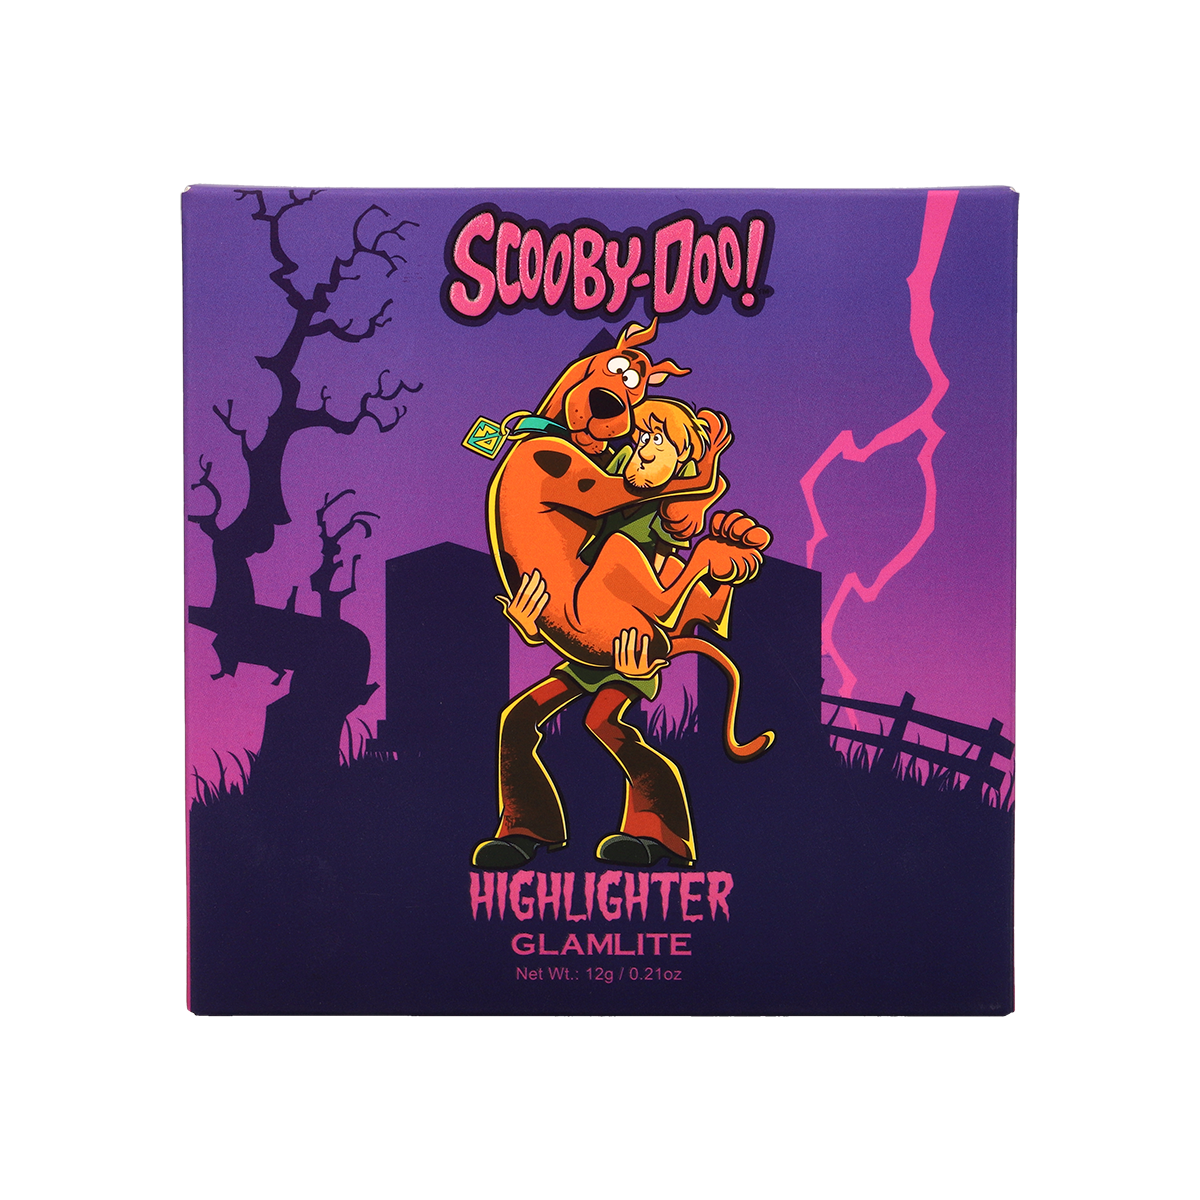 Scooby Doo x Glamlite Highlighter